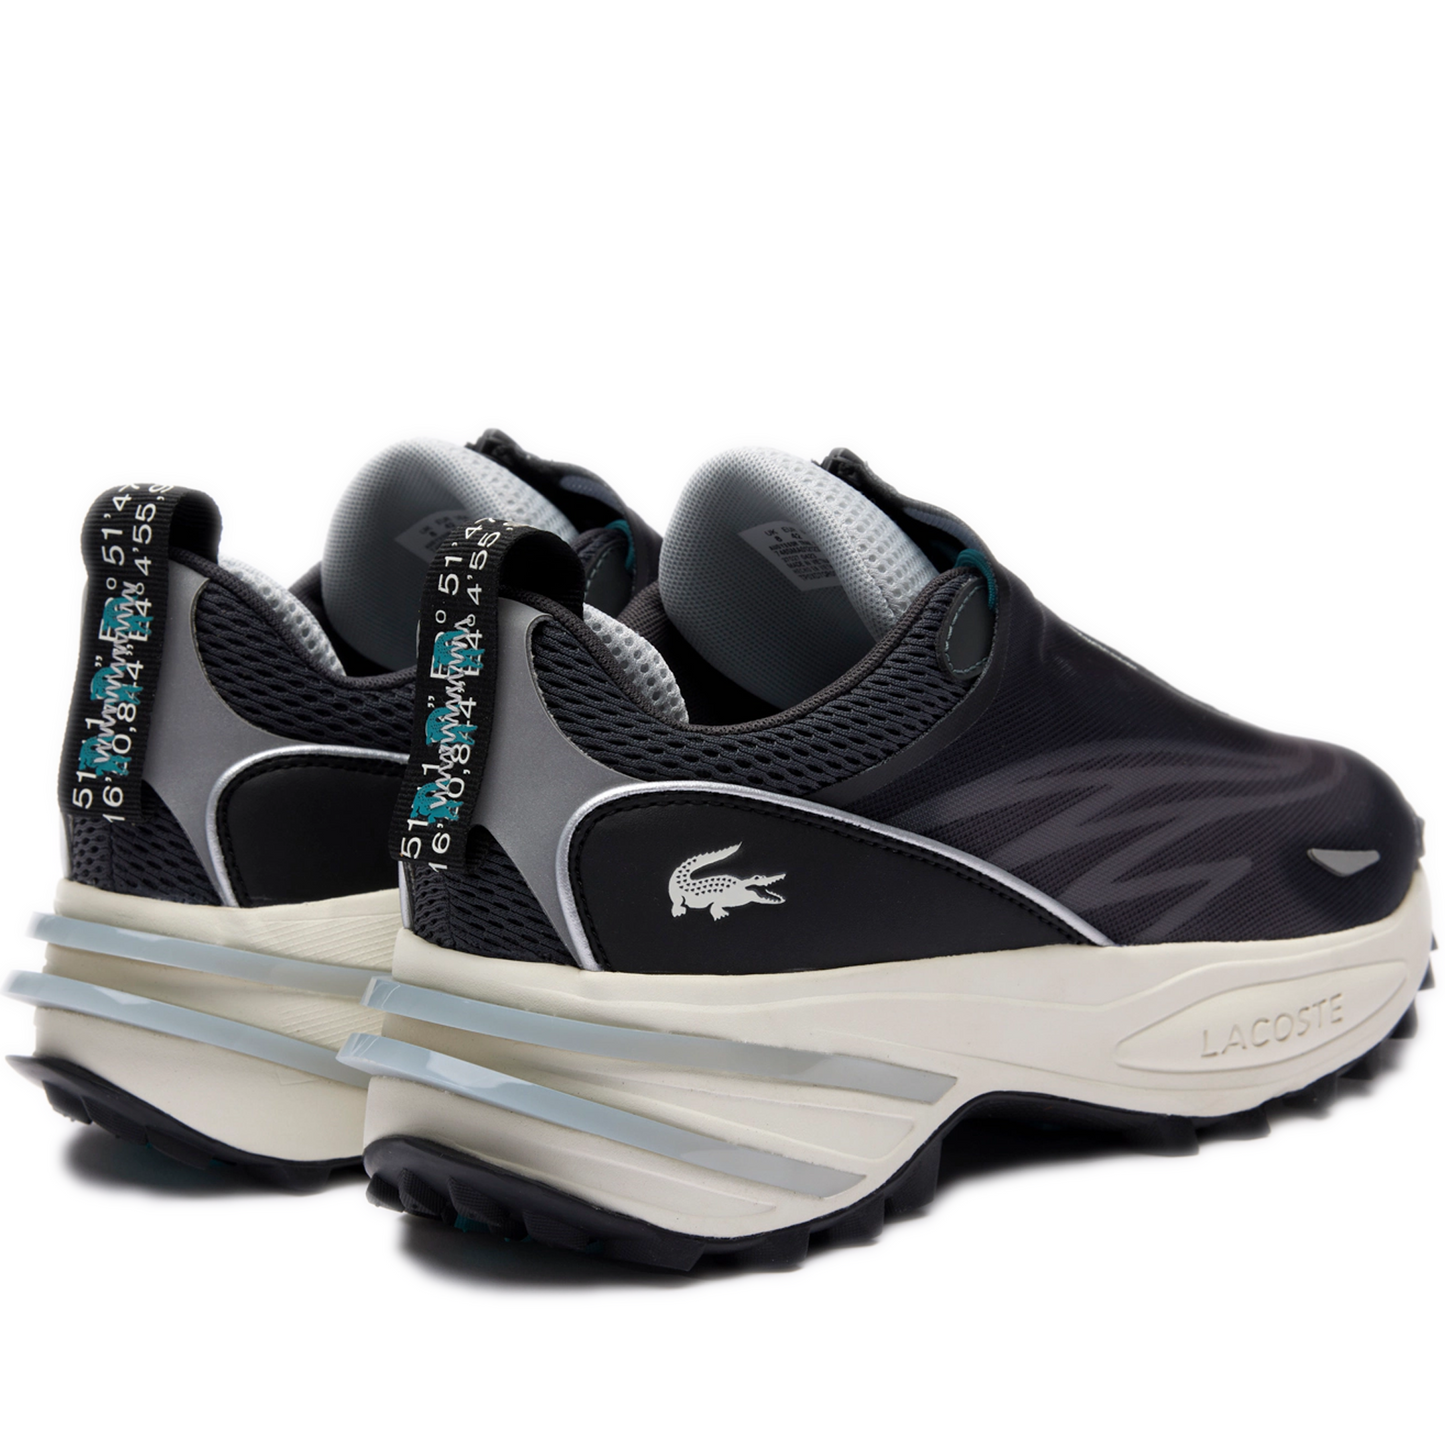 Men's Lacoste Outdoor Audyssor Trail Textile Sneakers - Black/ Dark Grey